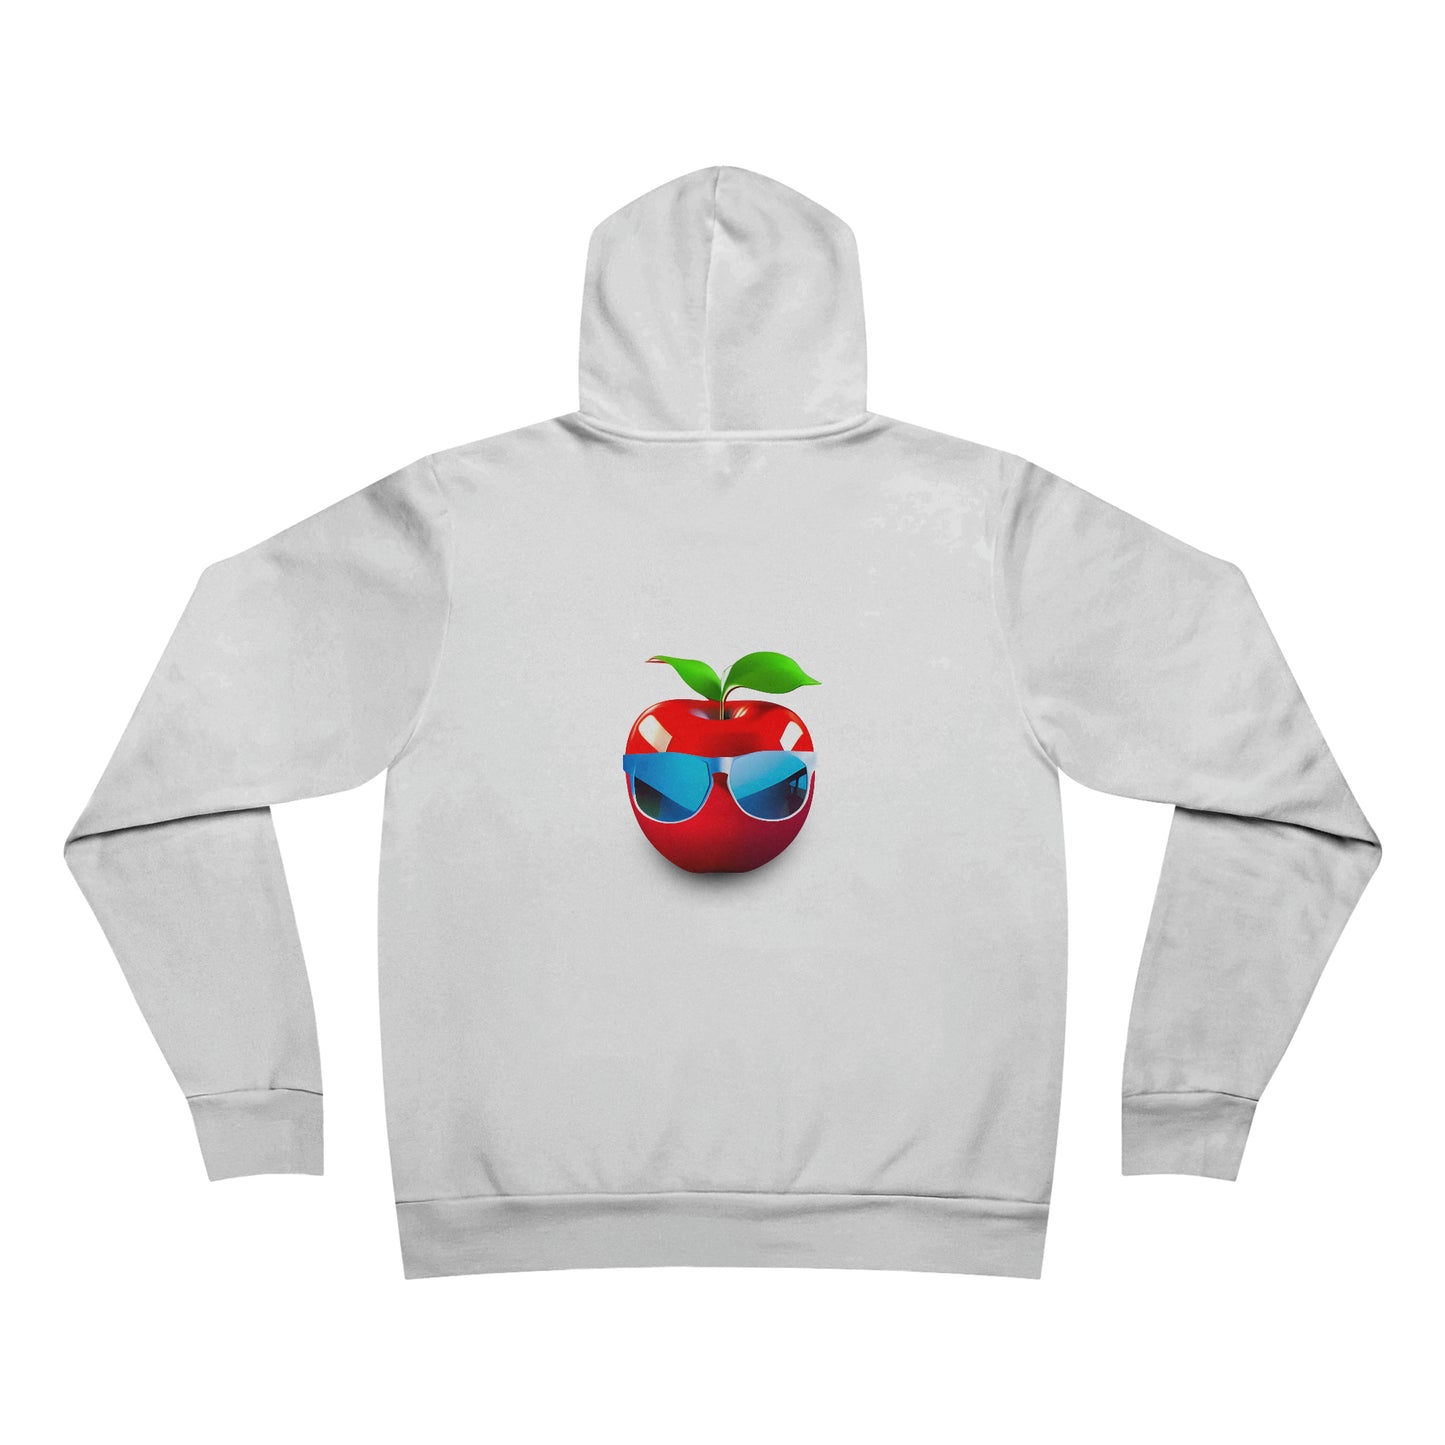 Vibrant Apple Ensemble Hoodie - Wear Your Inspiration